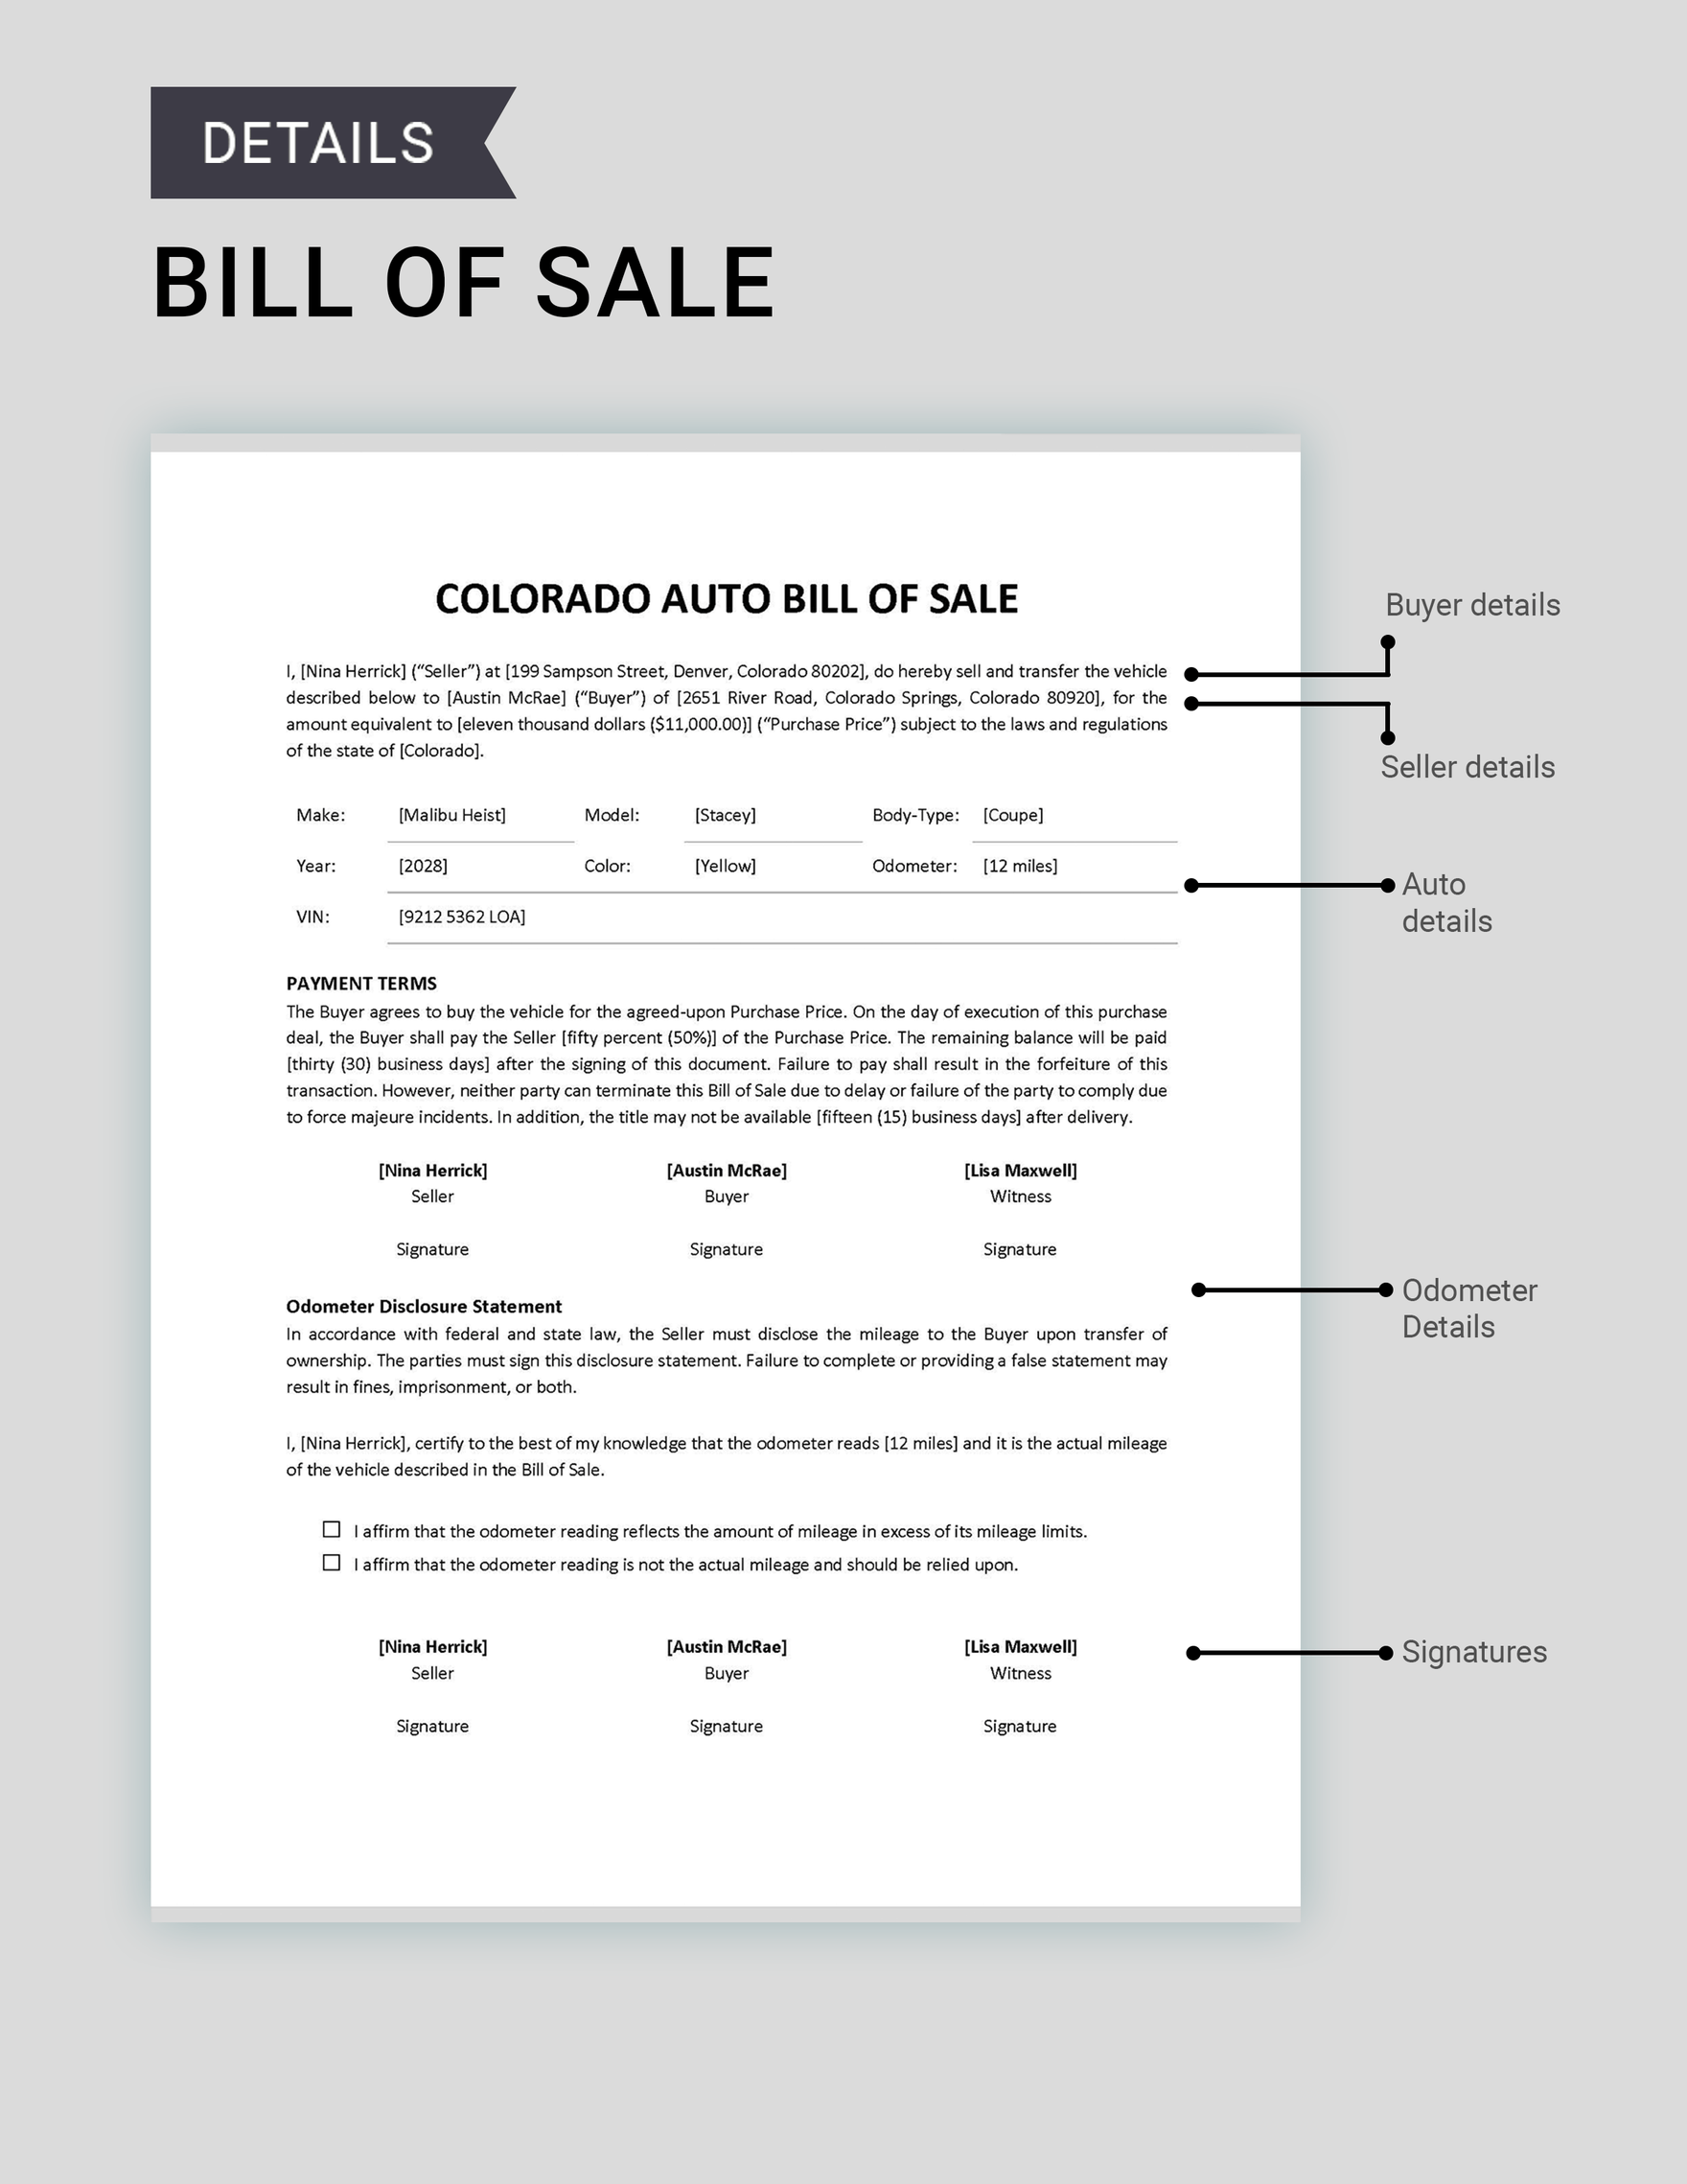 Colorado Auto Bill of Sale Template Download in Word, Google Docs